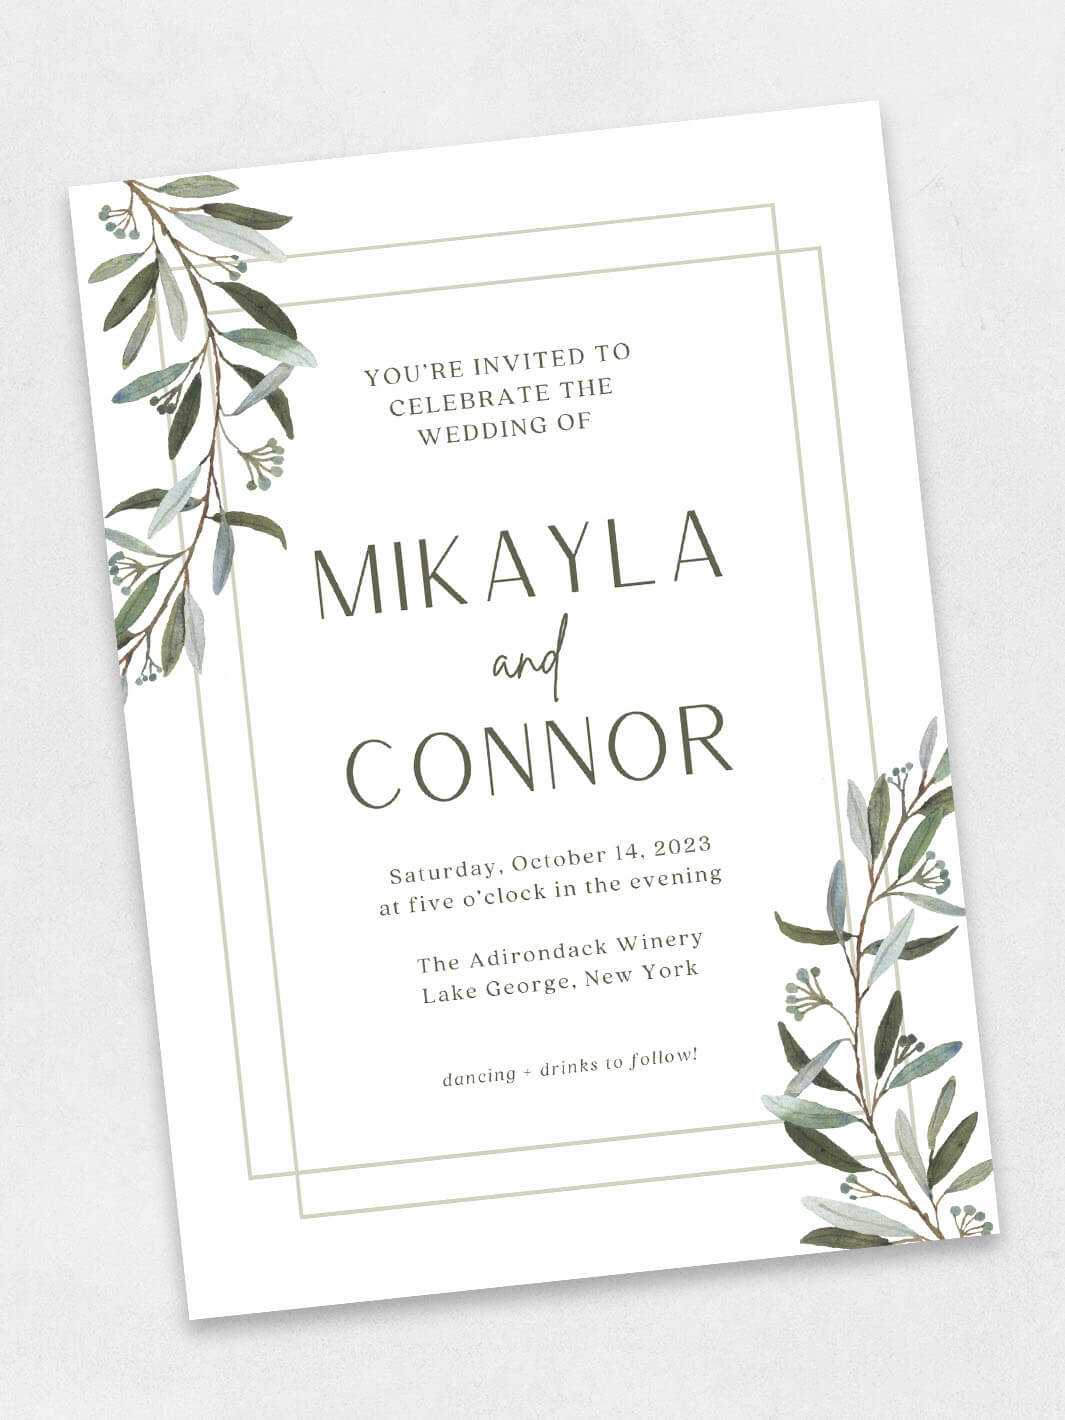 in the vines wedding invite